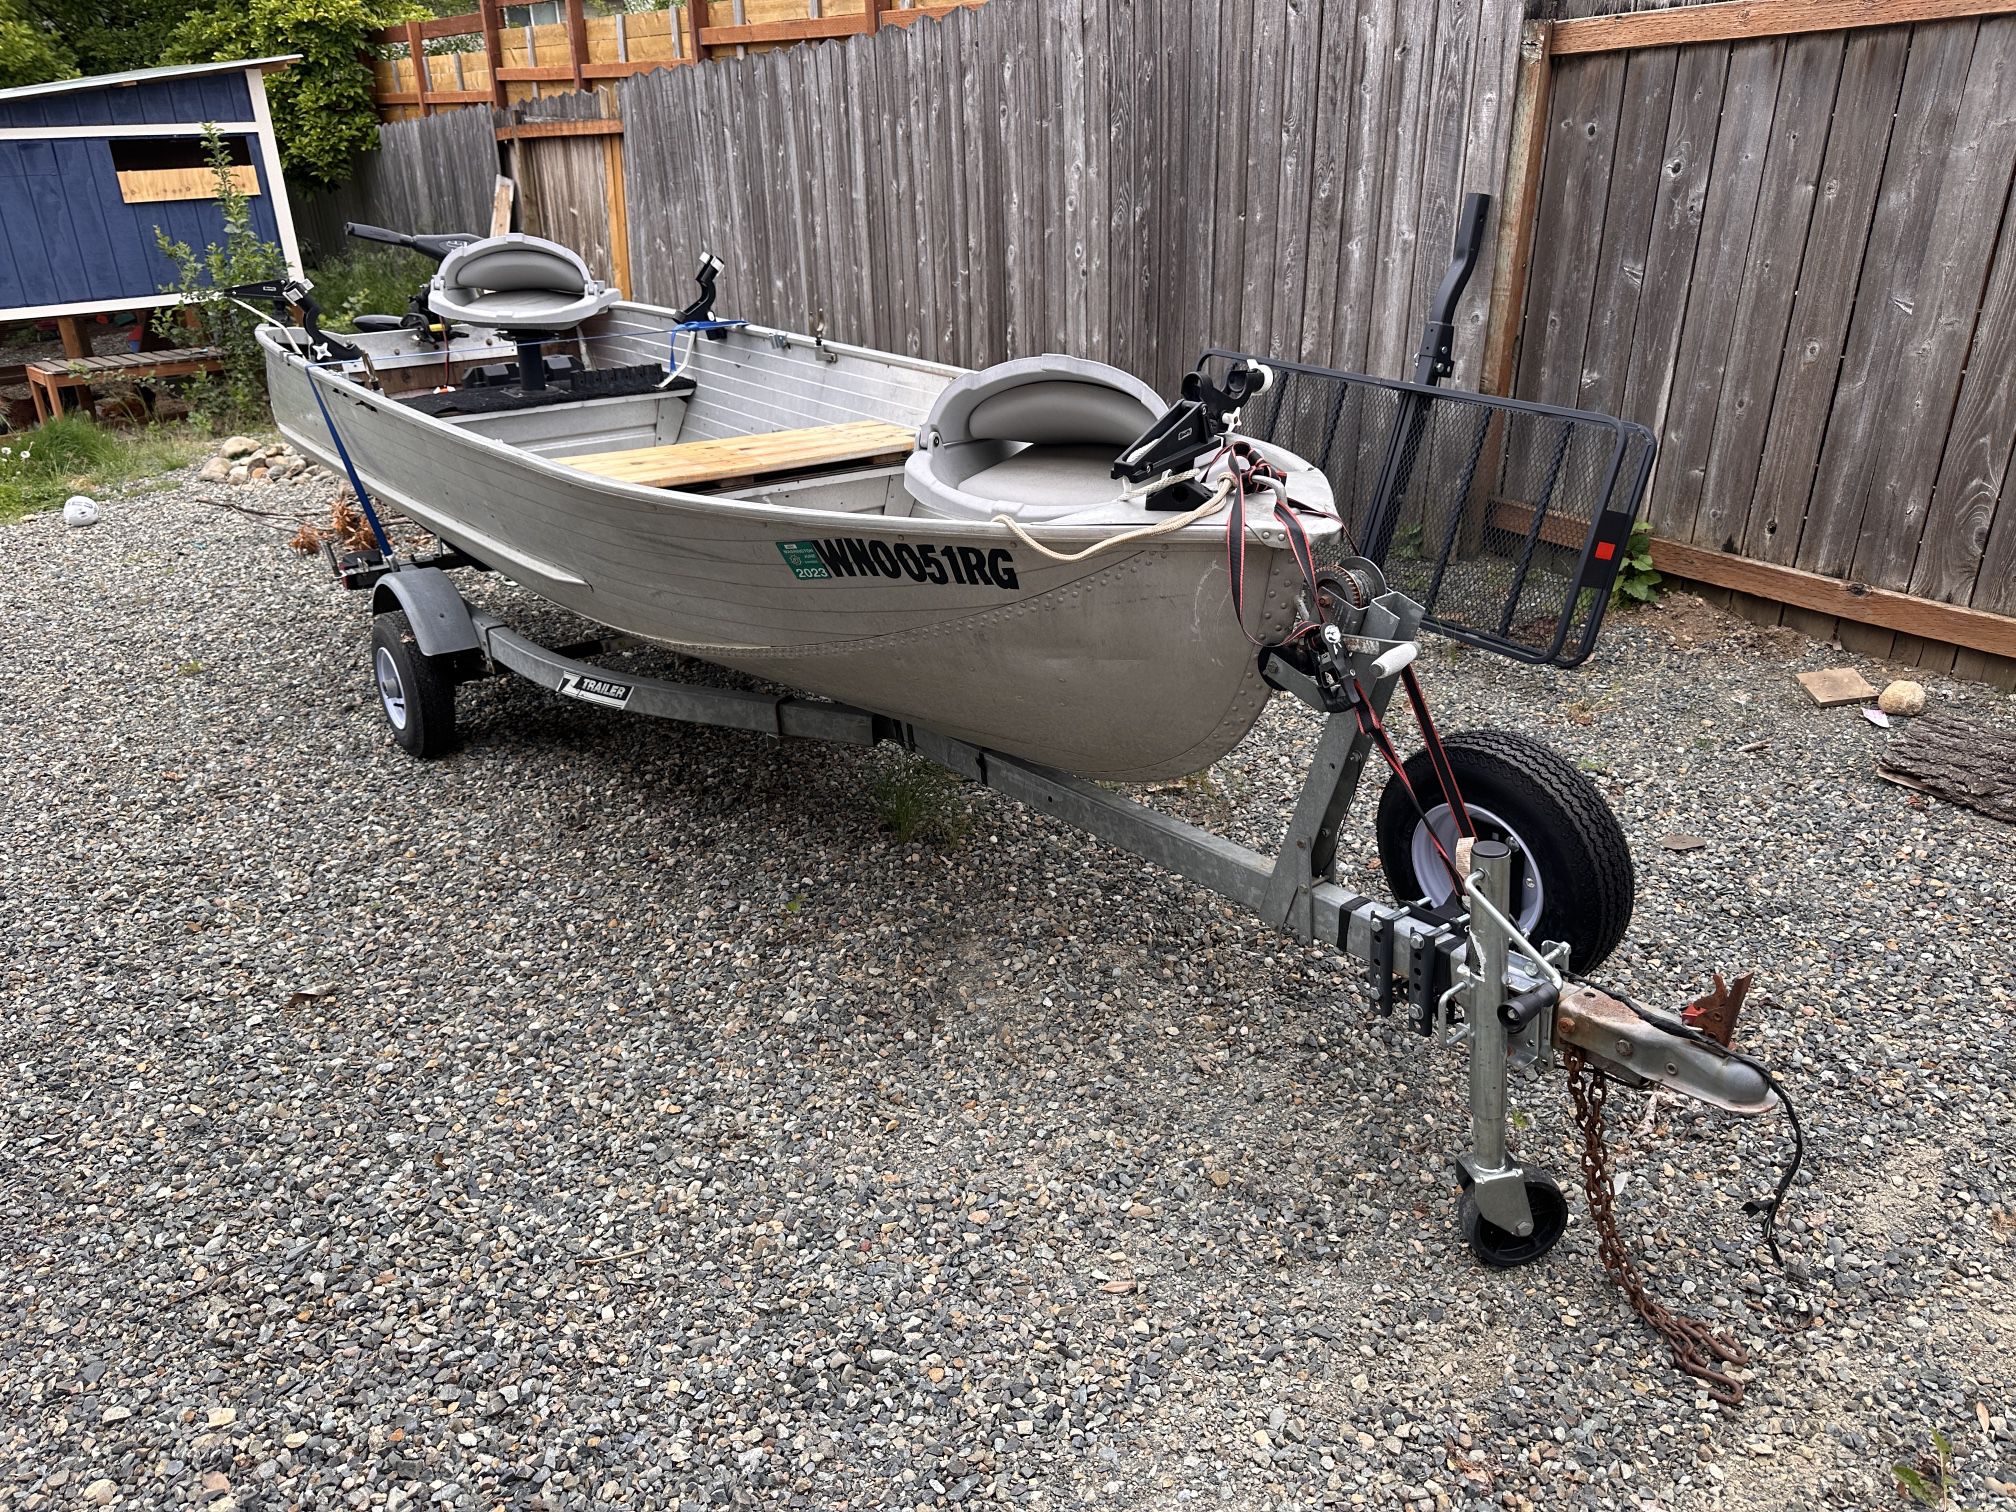 14’ Aluminum Fishing boat w/trailer